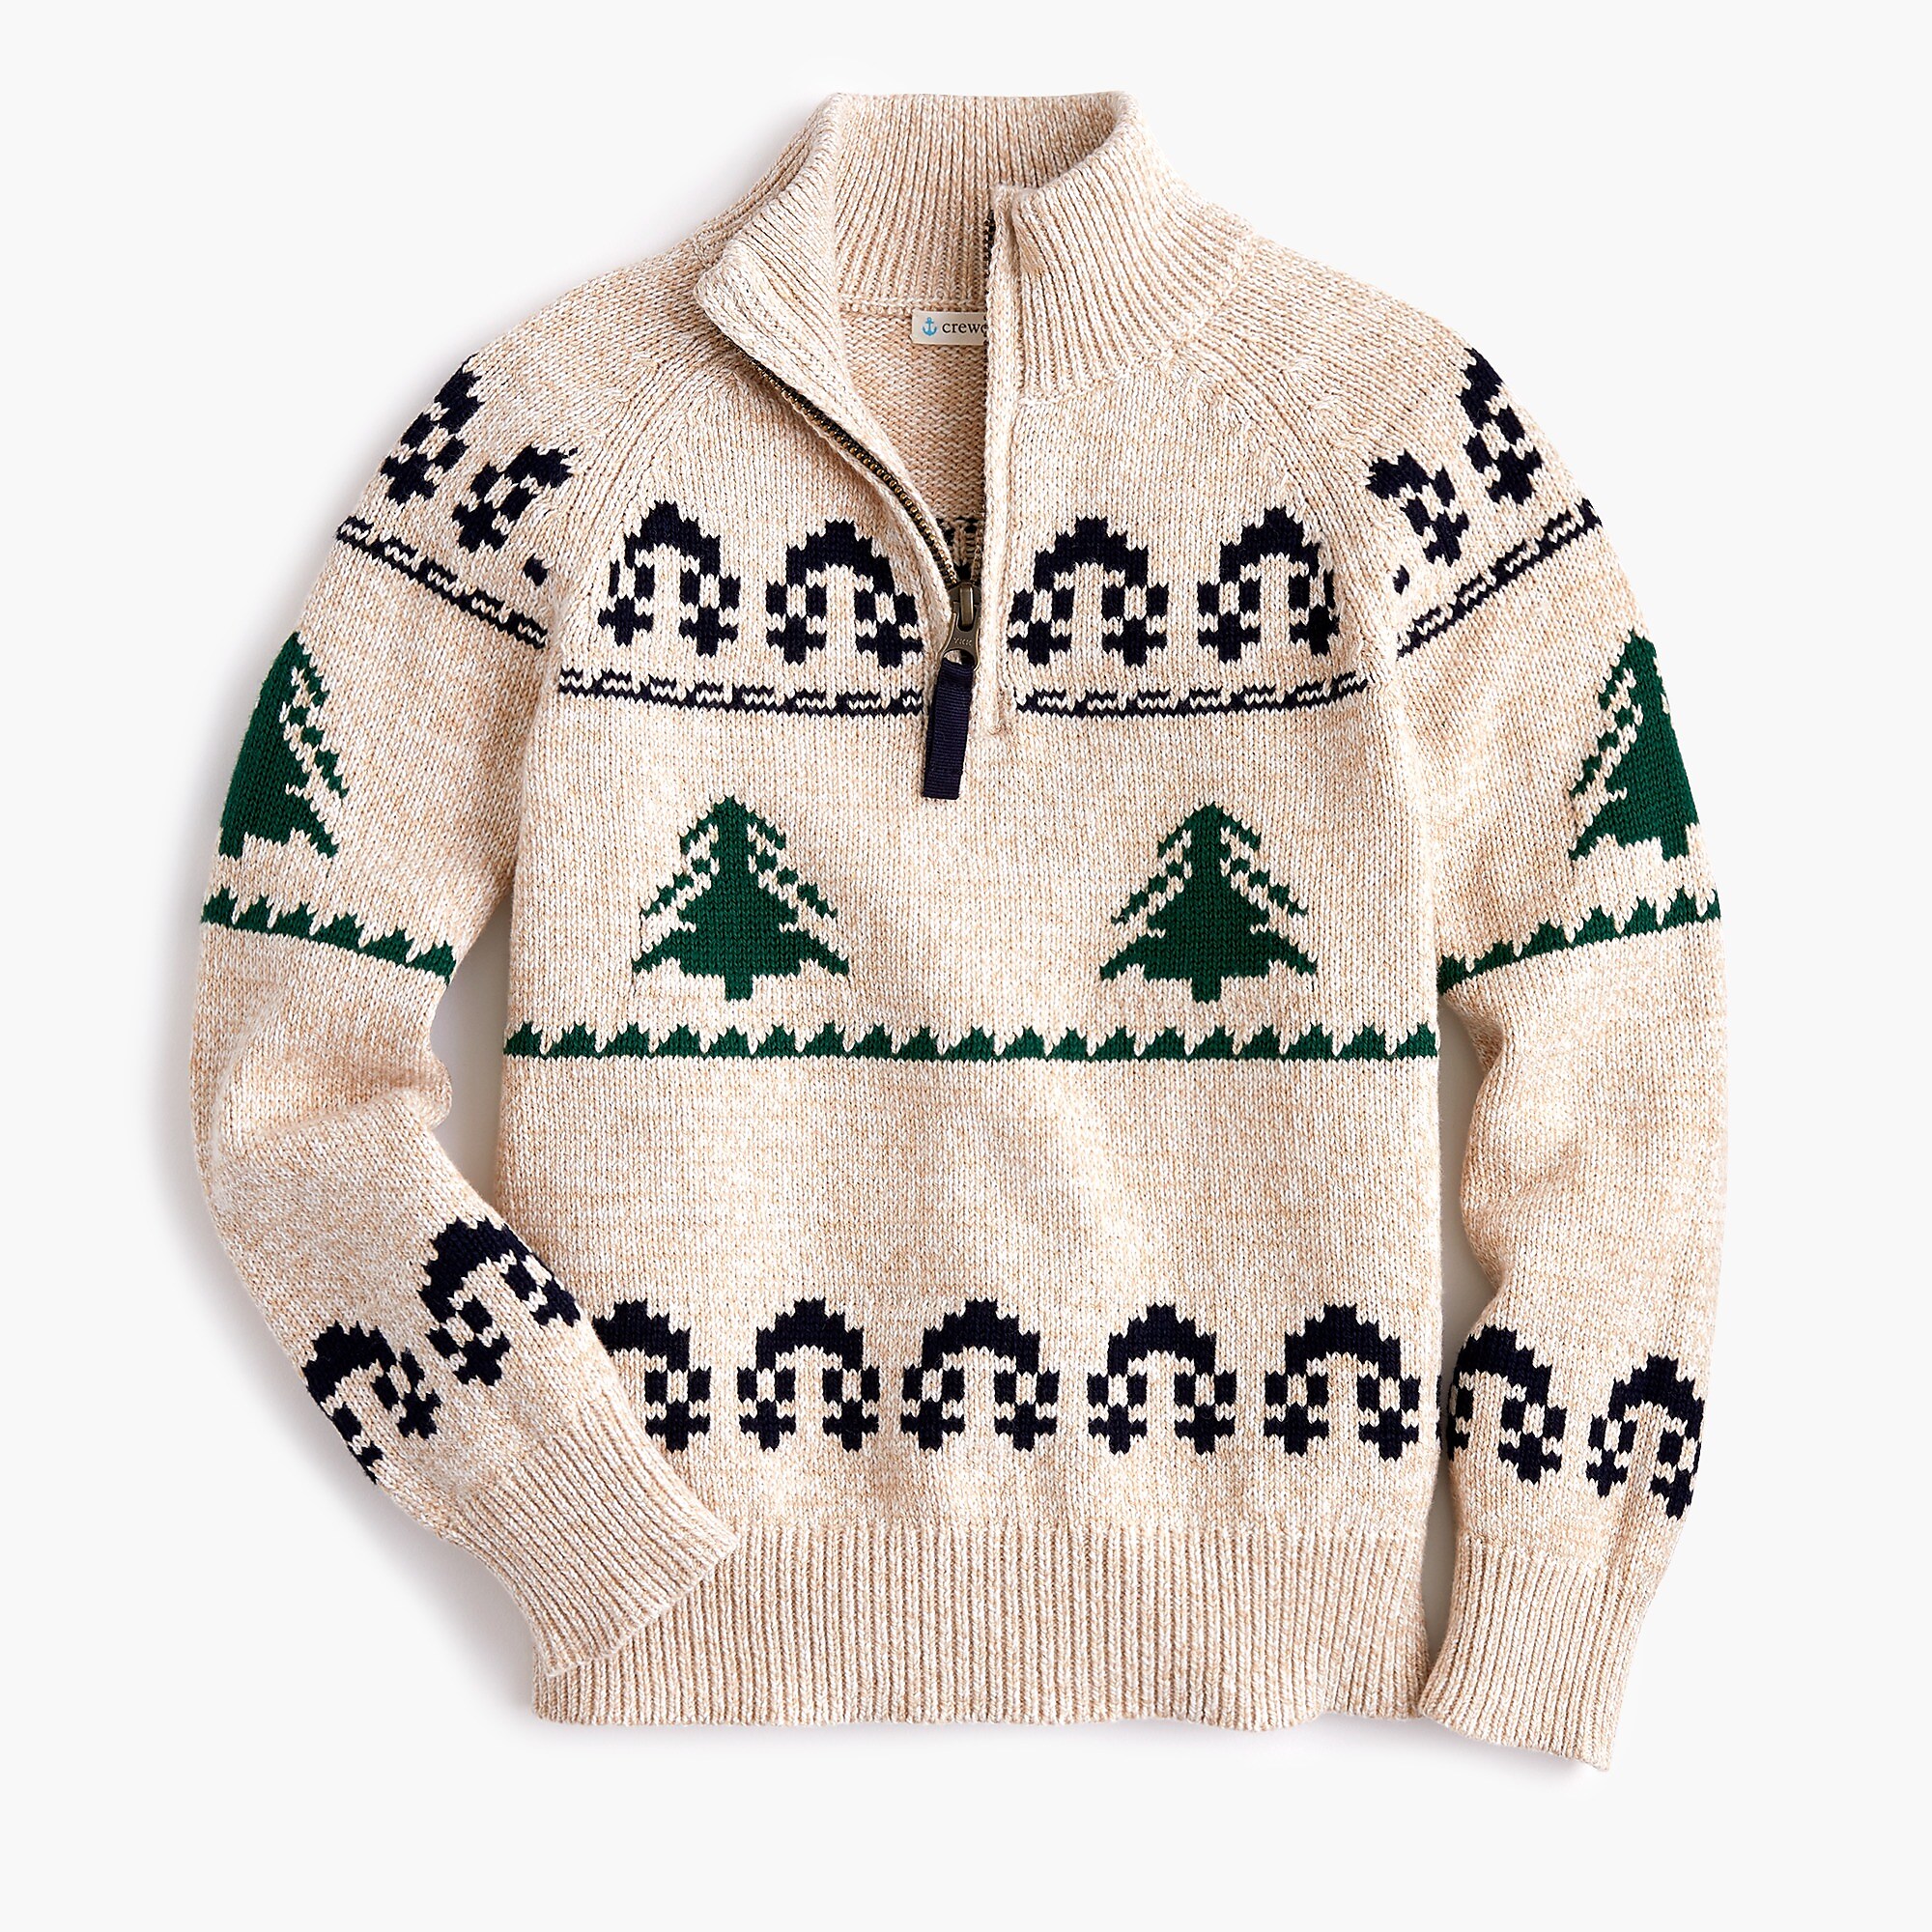 Knitting Half Sweater Design For Boy